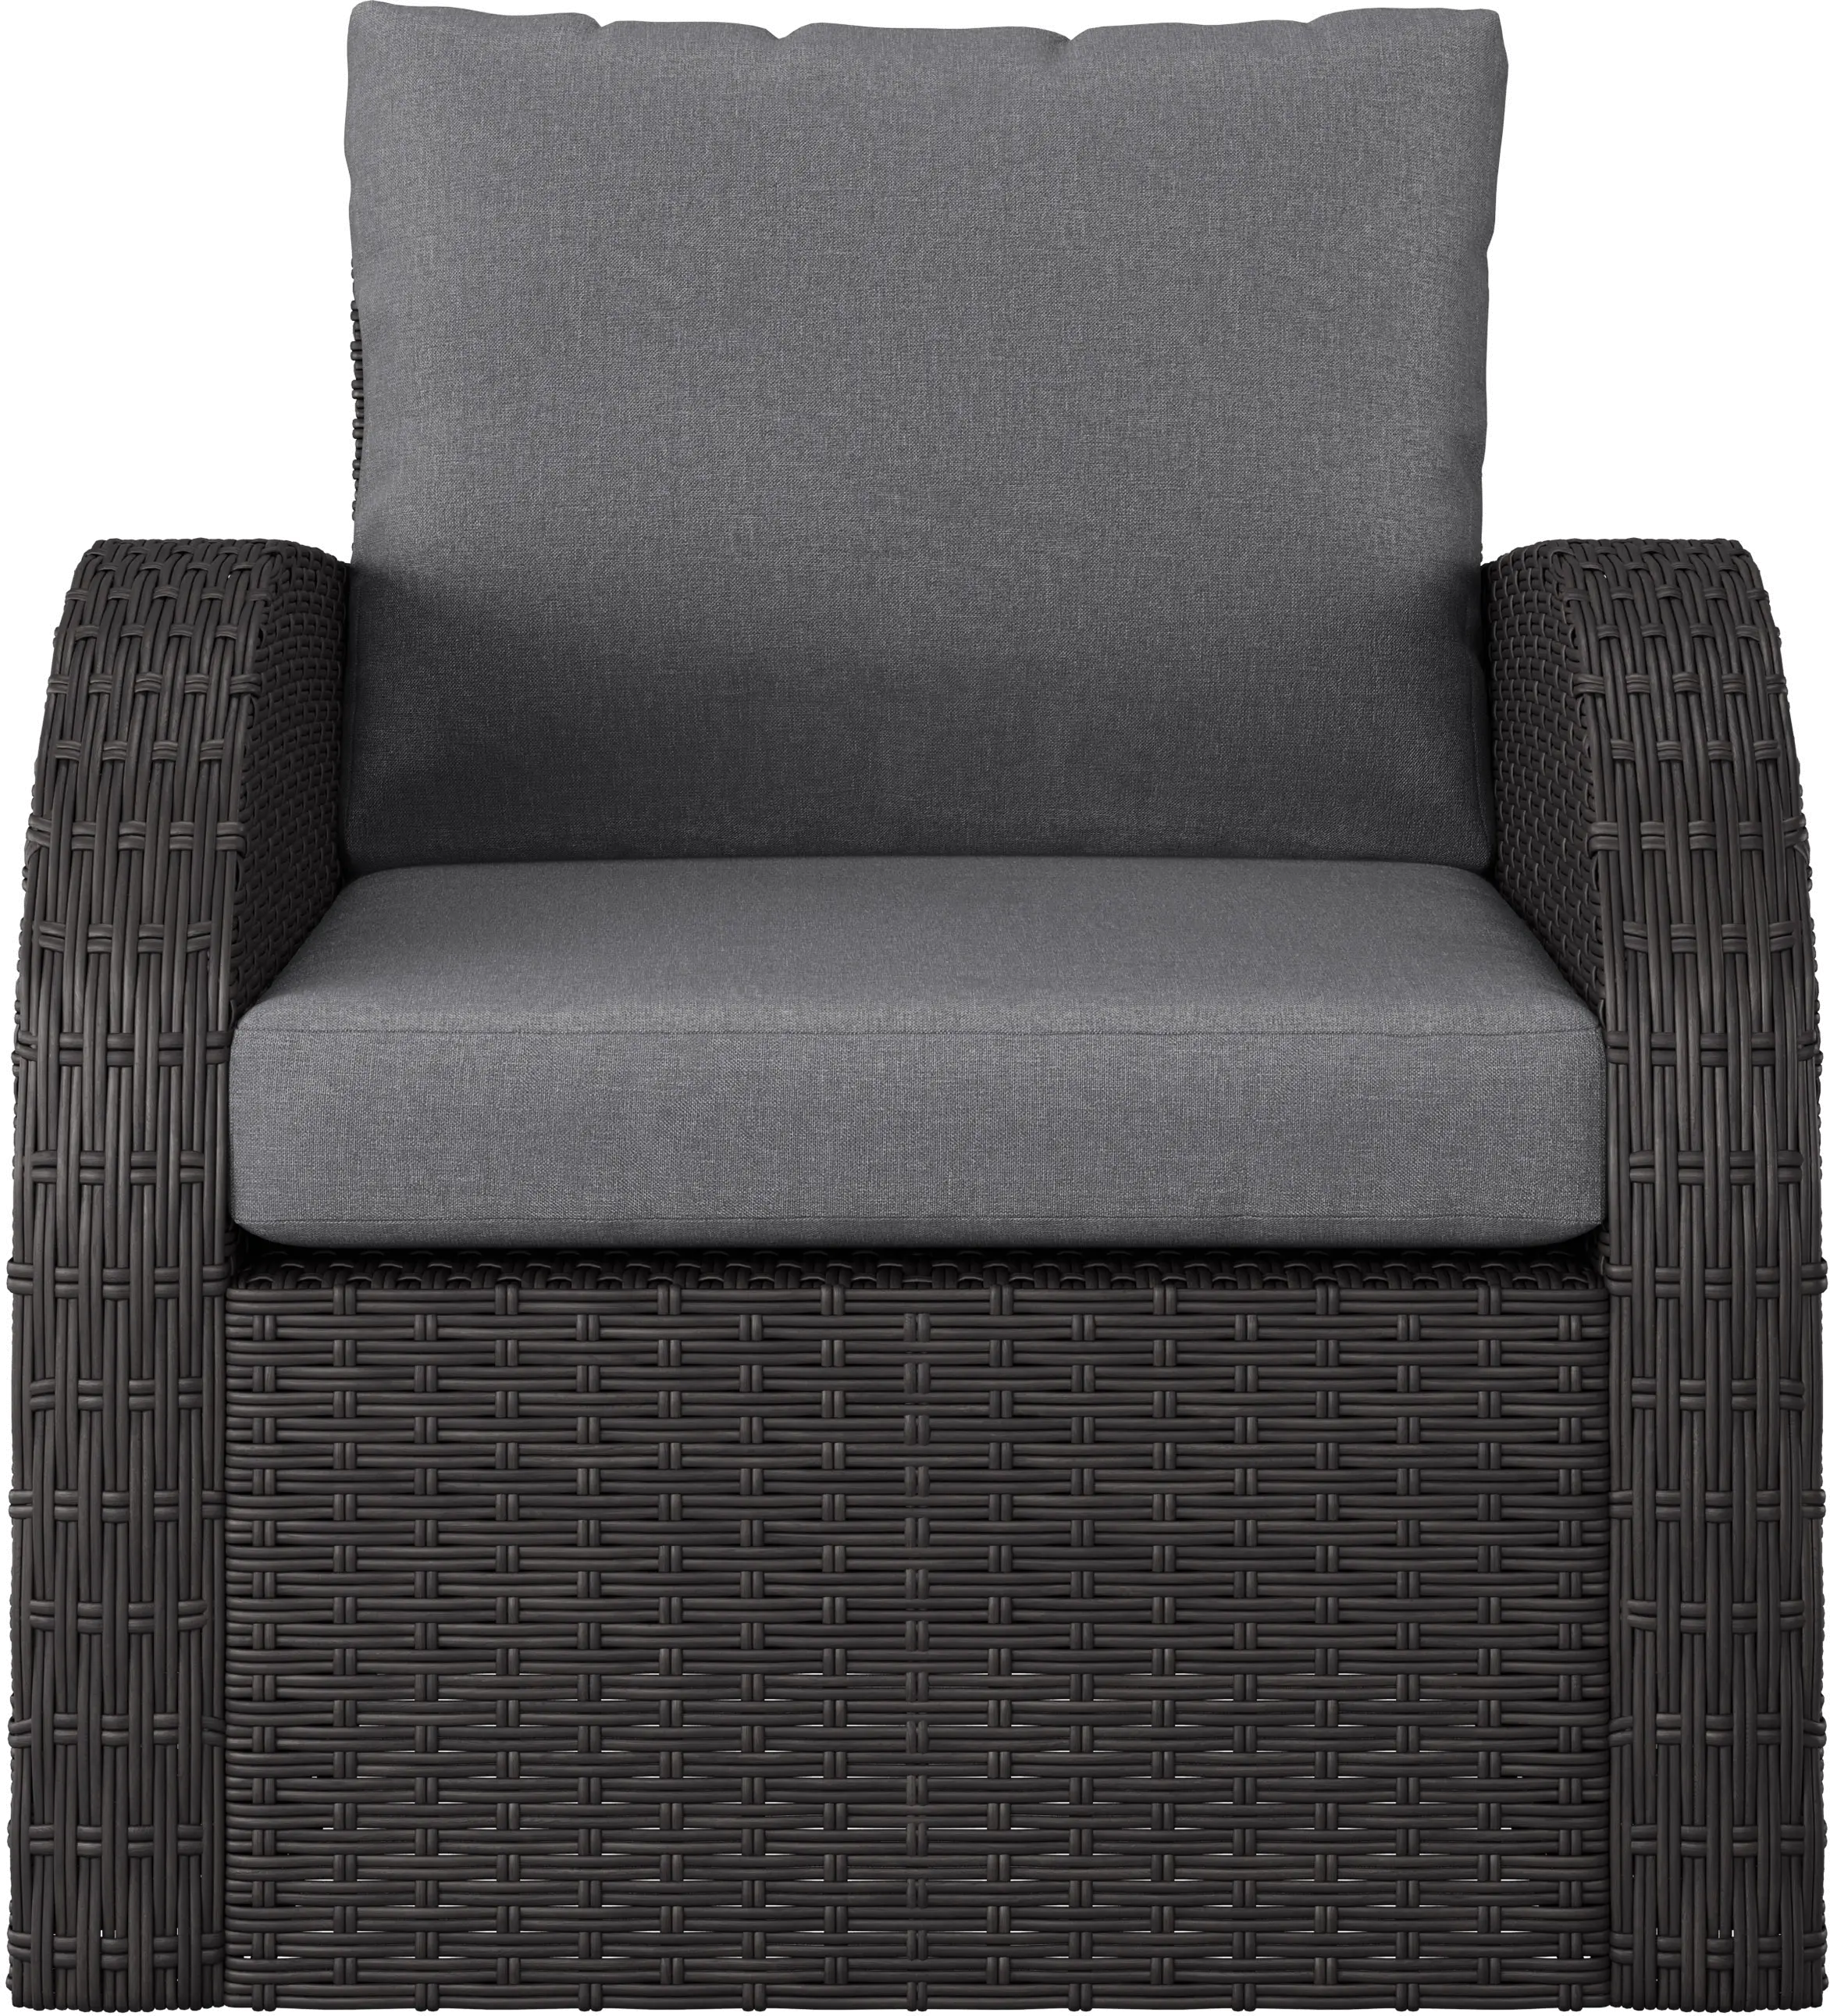 Brisbane Charcoal Gray Outdoor Wicker Chair